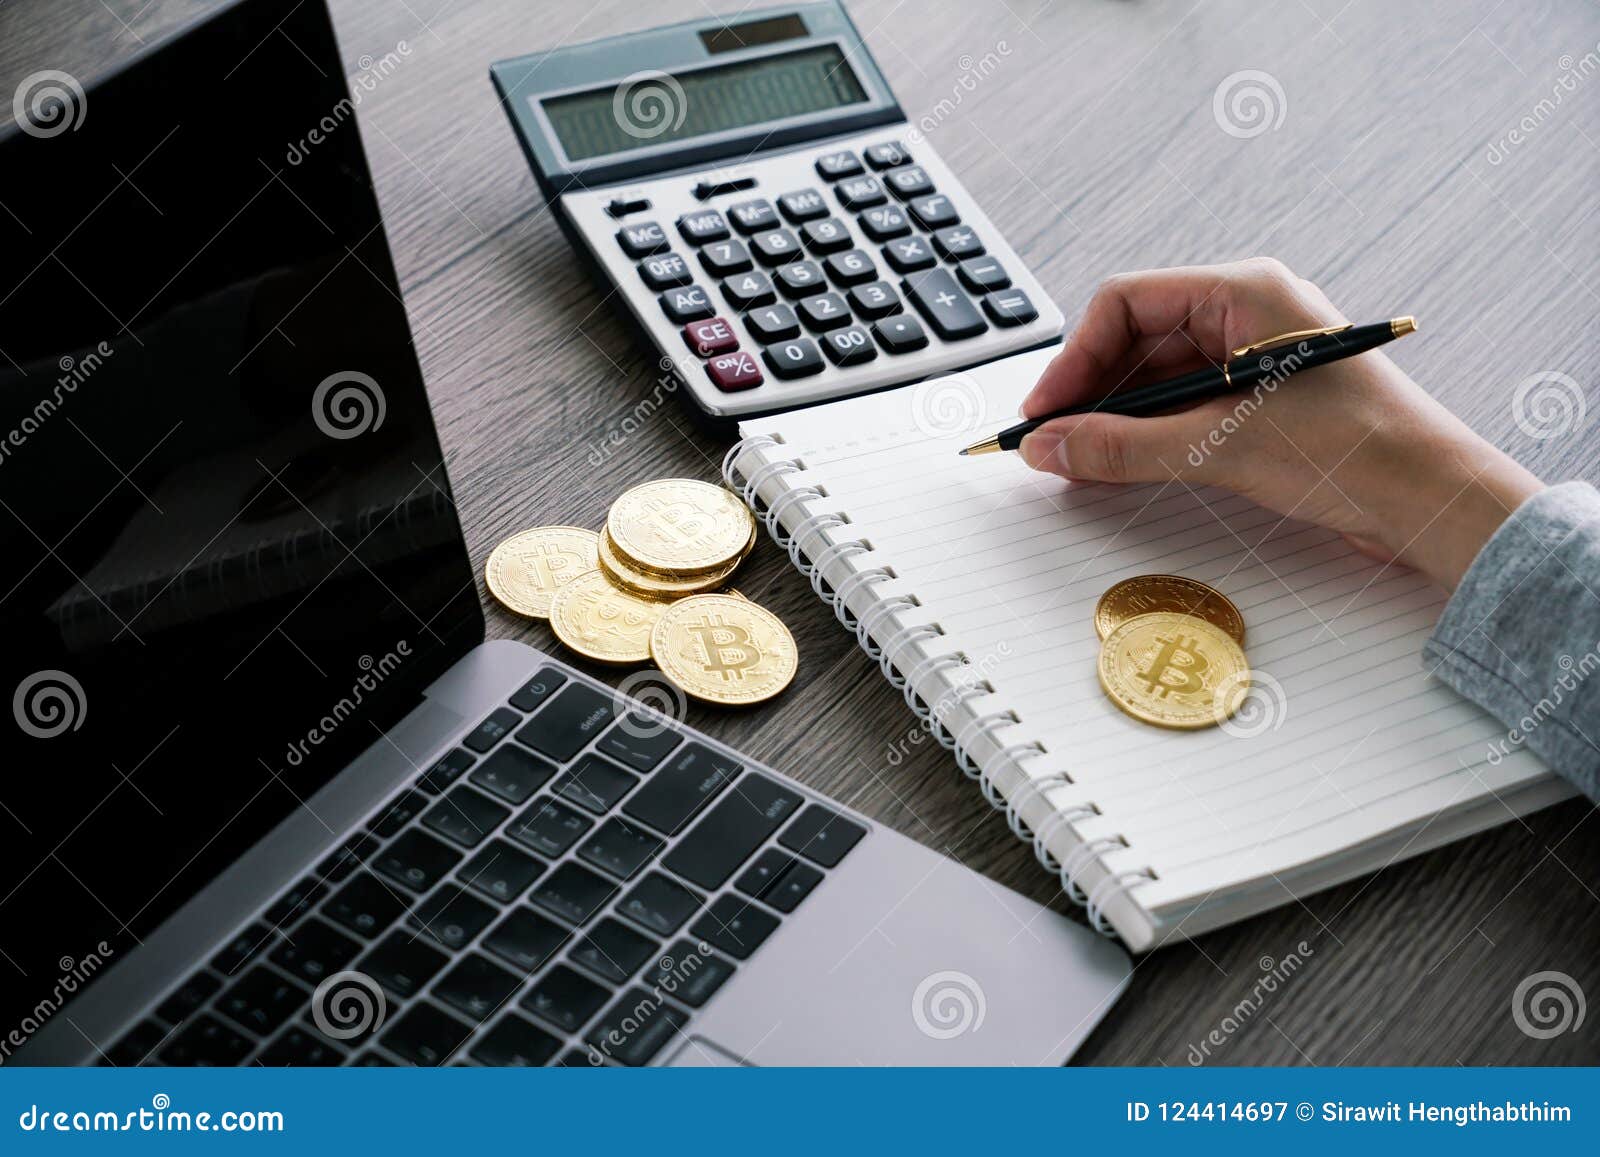 Calculate Bitcoin Investment / Btc to usd calculator ...